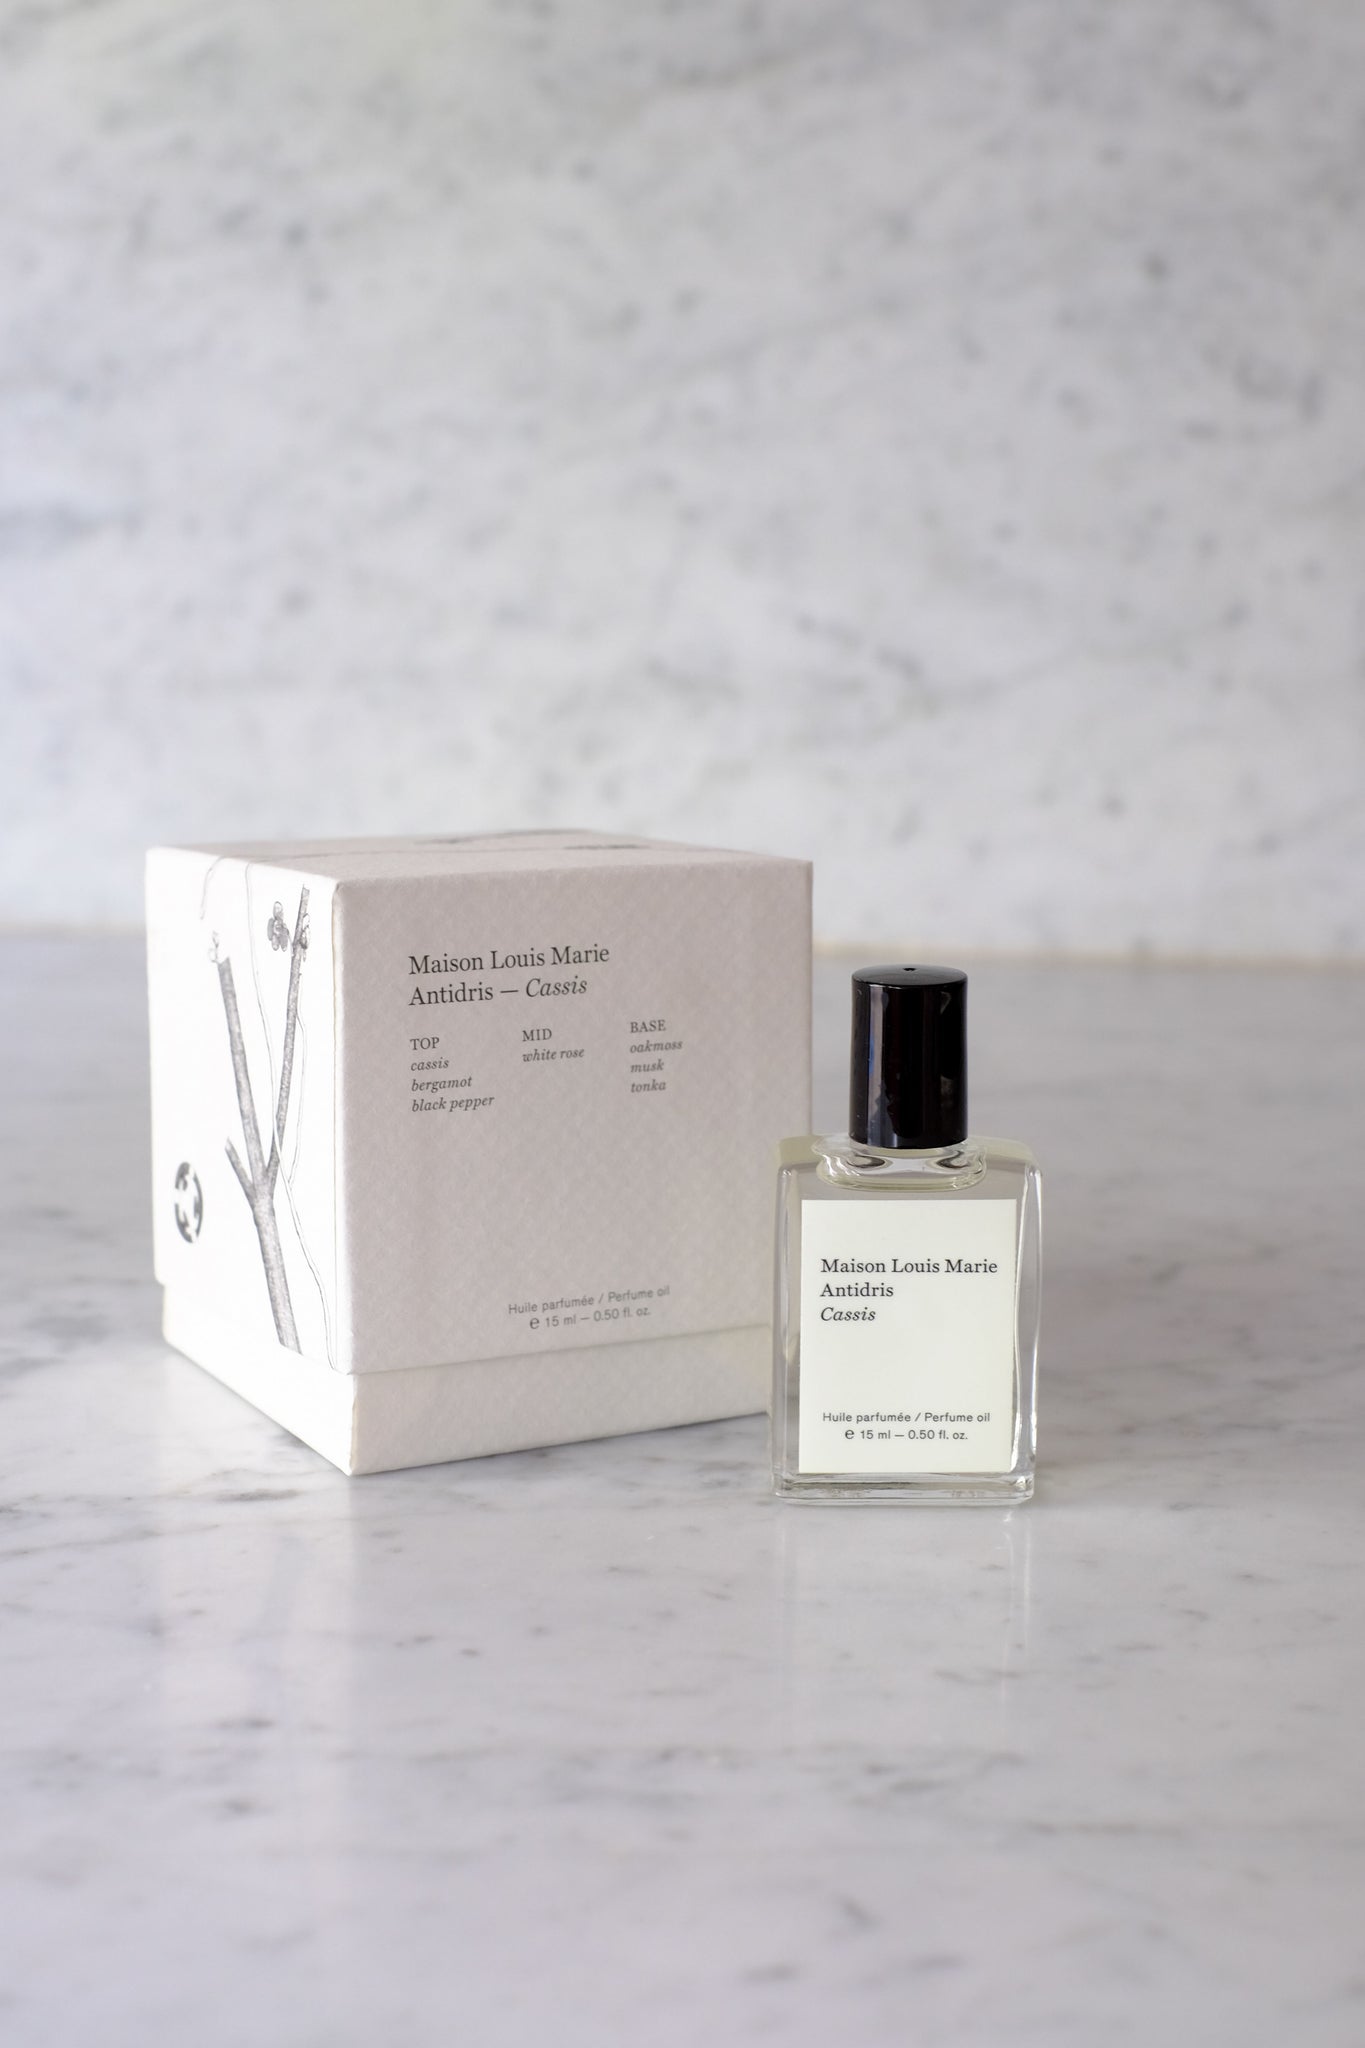 Maison Louis Marie :: Perfume Oil Antidris Cassis